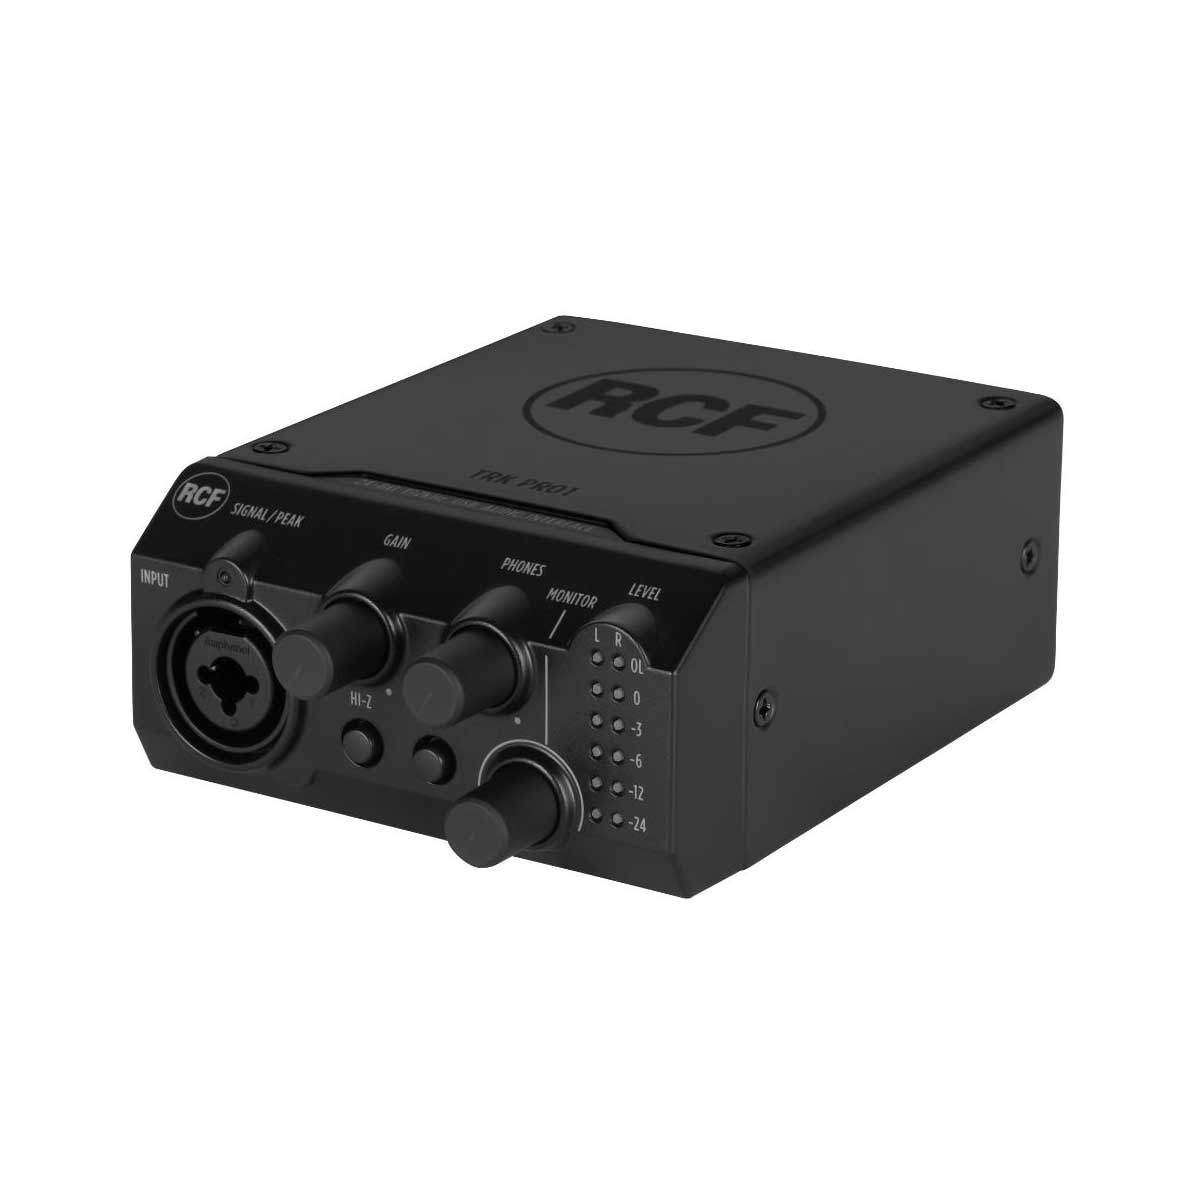 RCF TRK PRO1 24-Bit 192 Khz USB Audio Interface